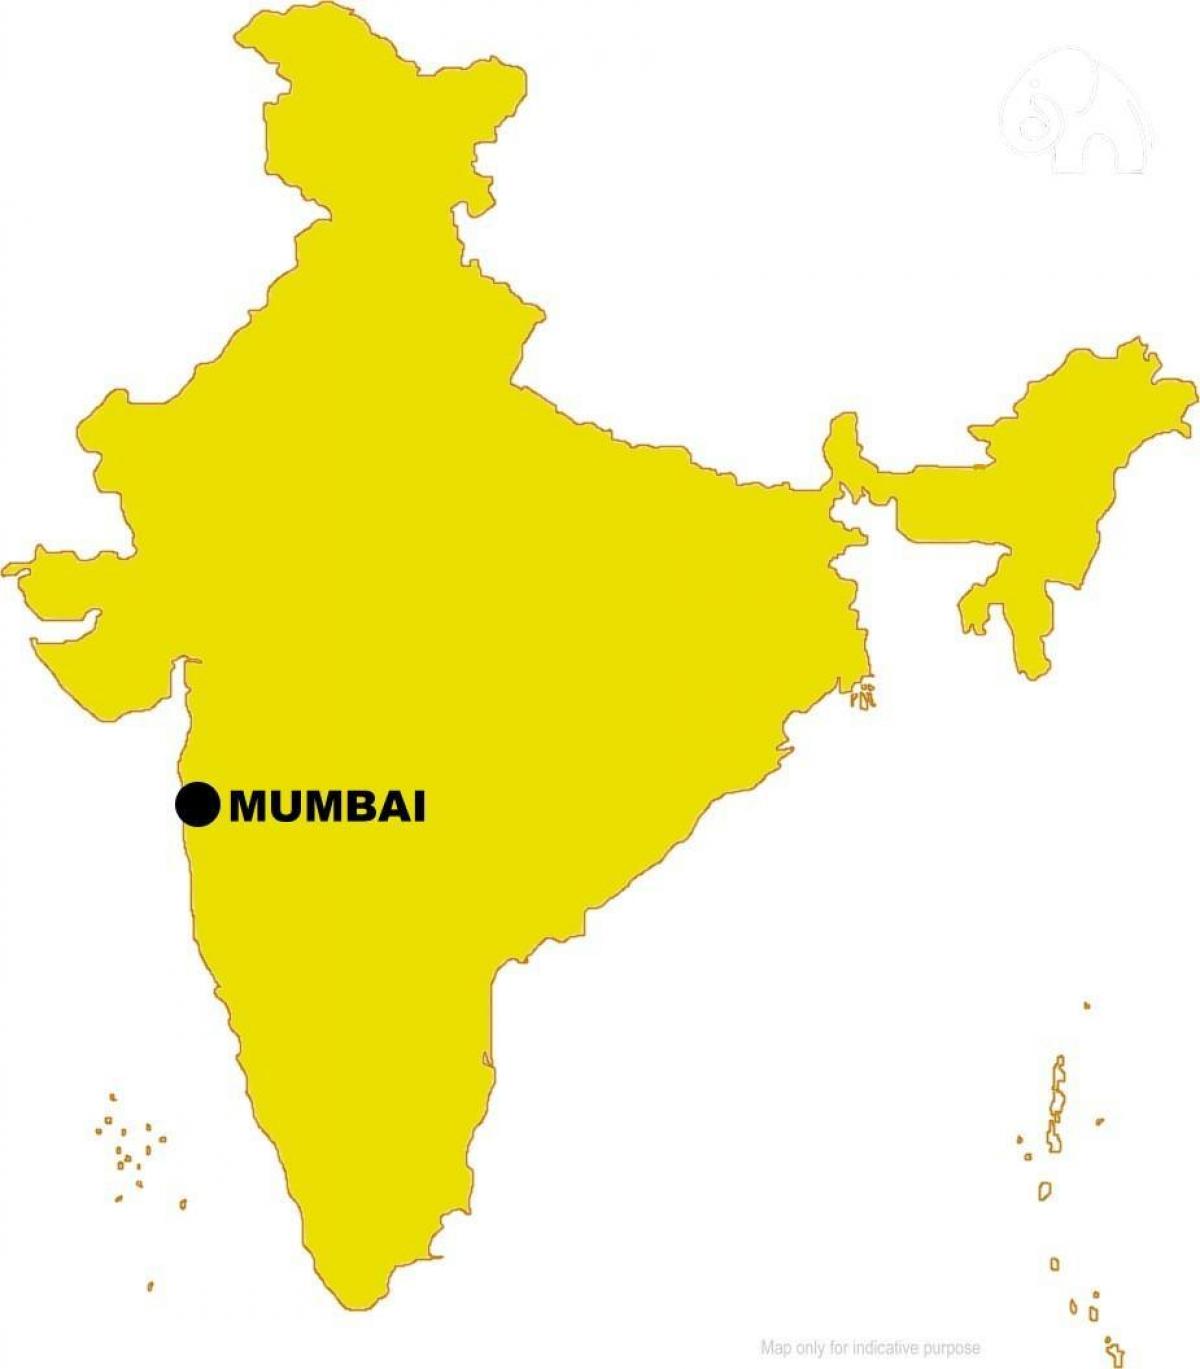 Mumbai kaart